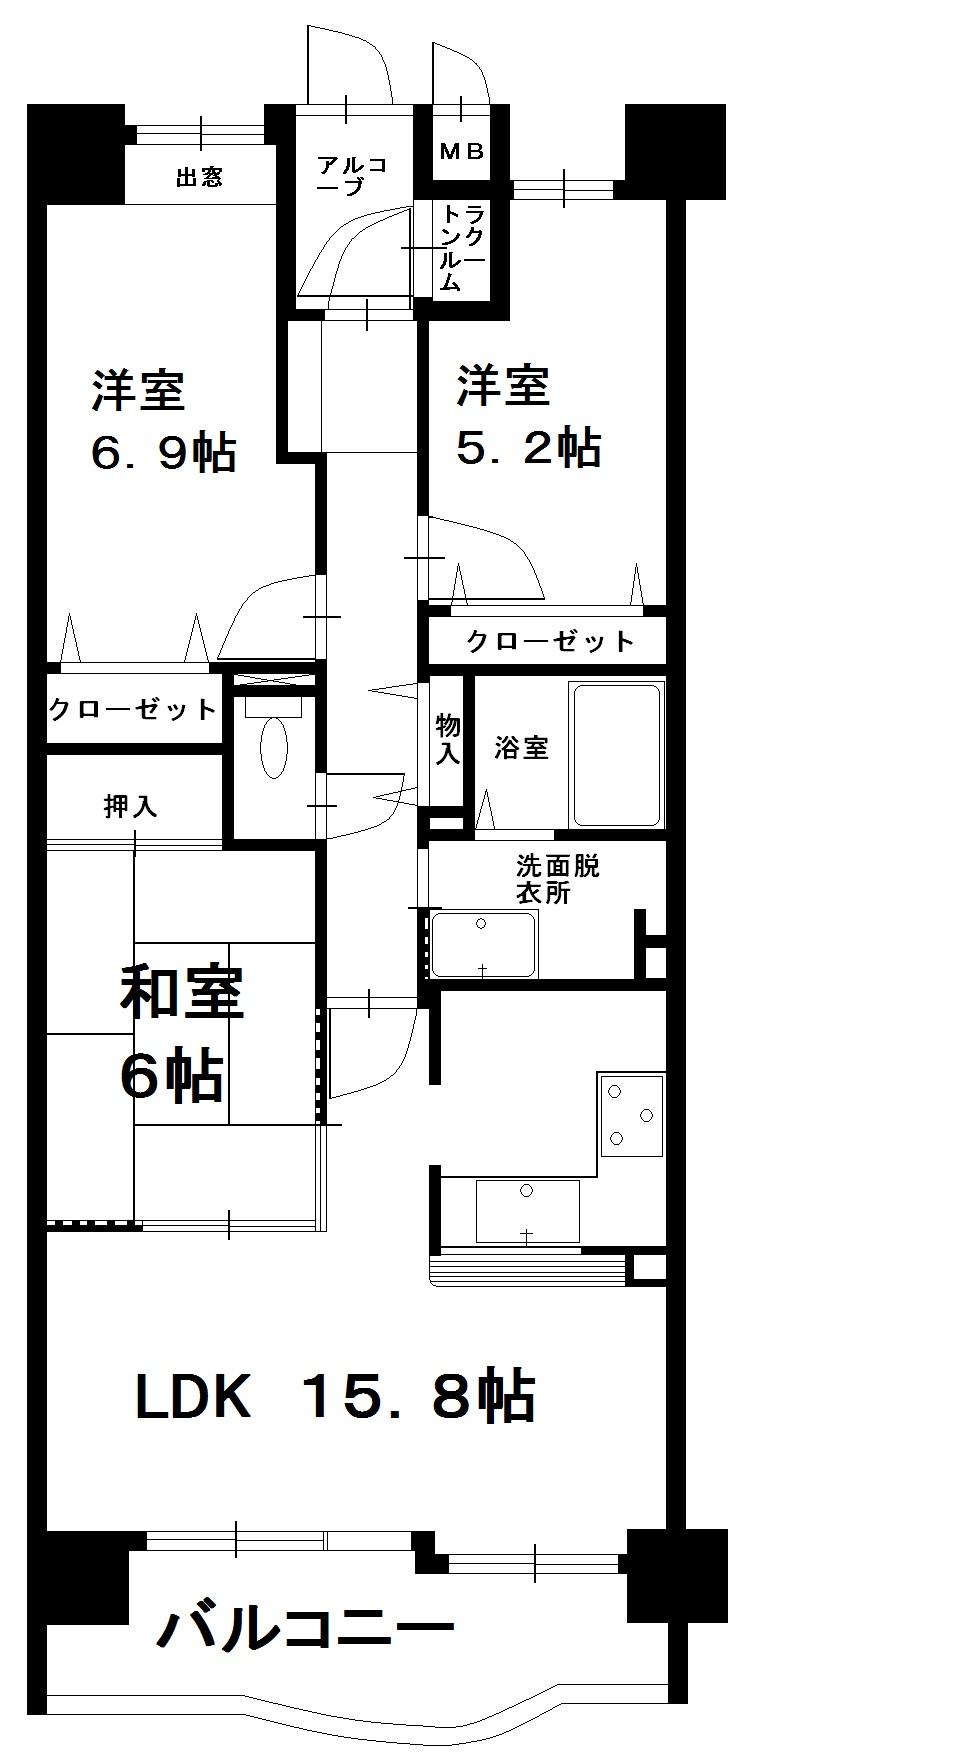 Floor plan. 4LDK, Price 12.8 million yen, Occupied area 75.11 sq m , Balcony area 9.93 sq m